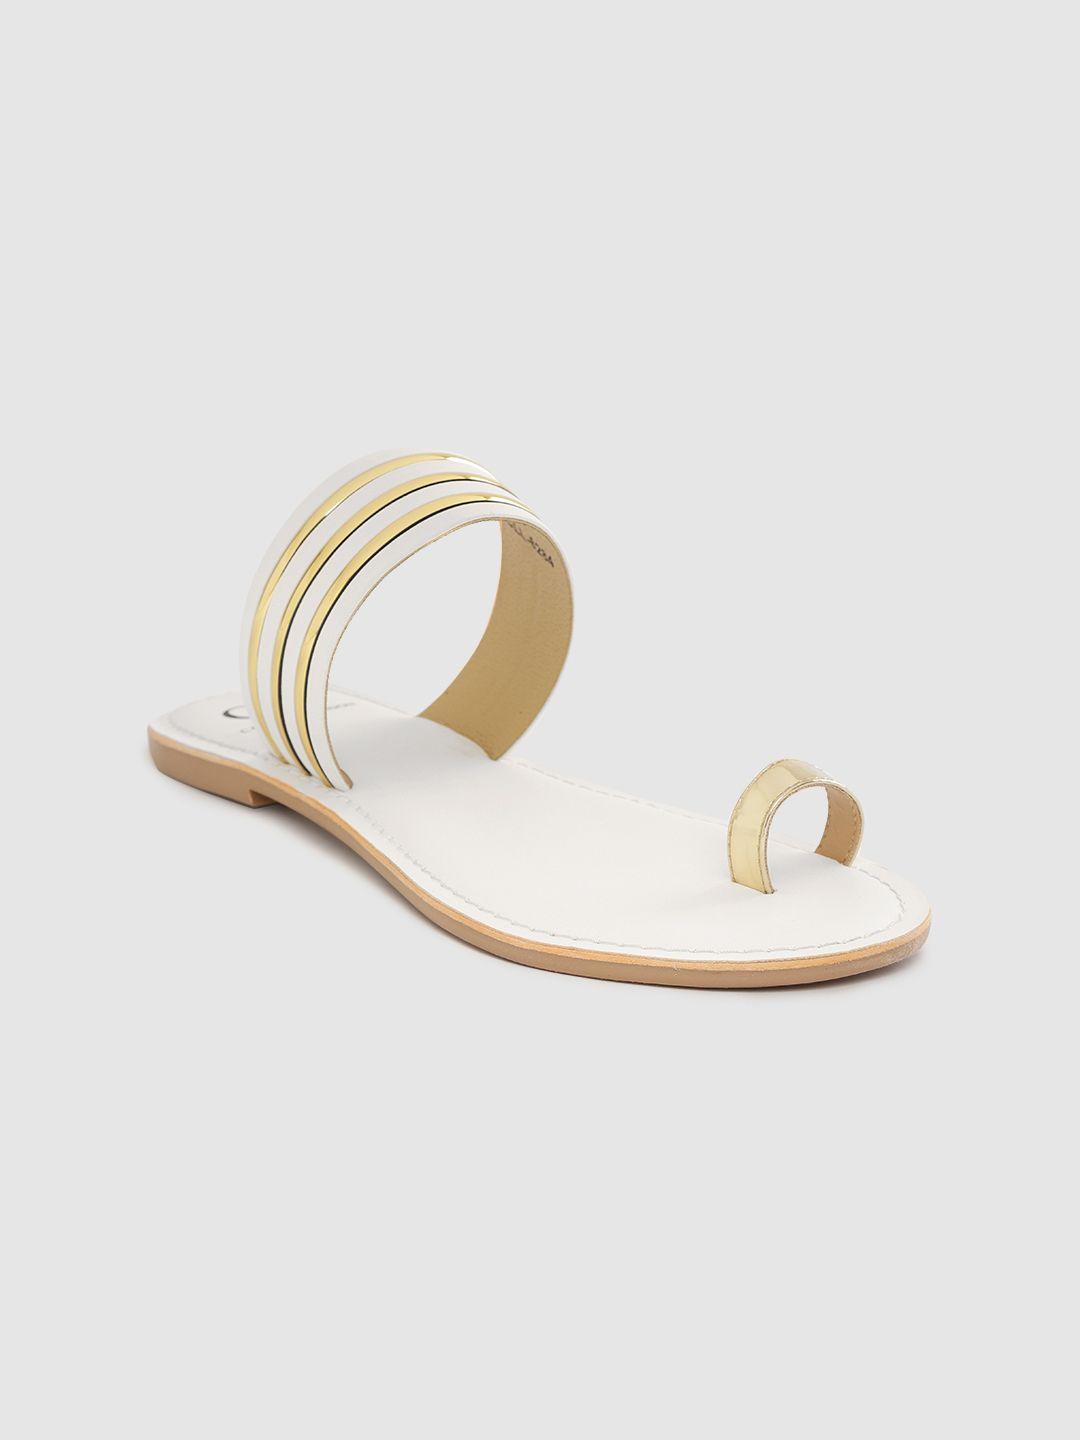 carlton london women white & gold-toned striped one toe flats